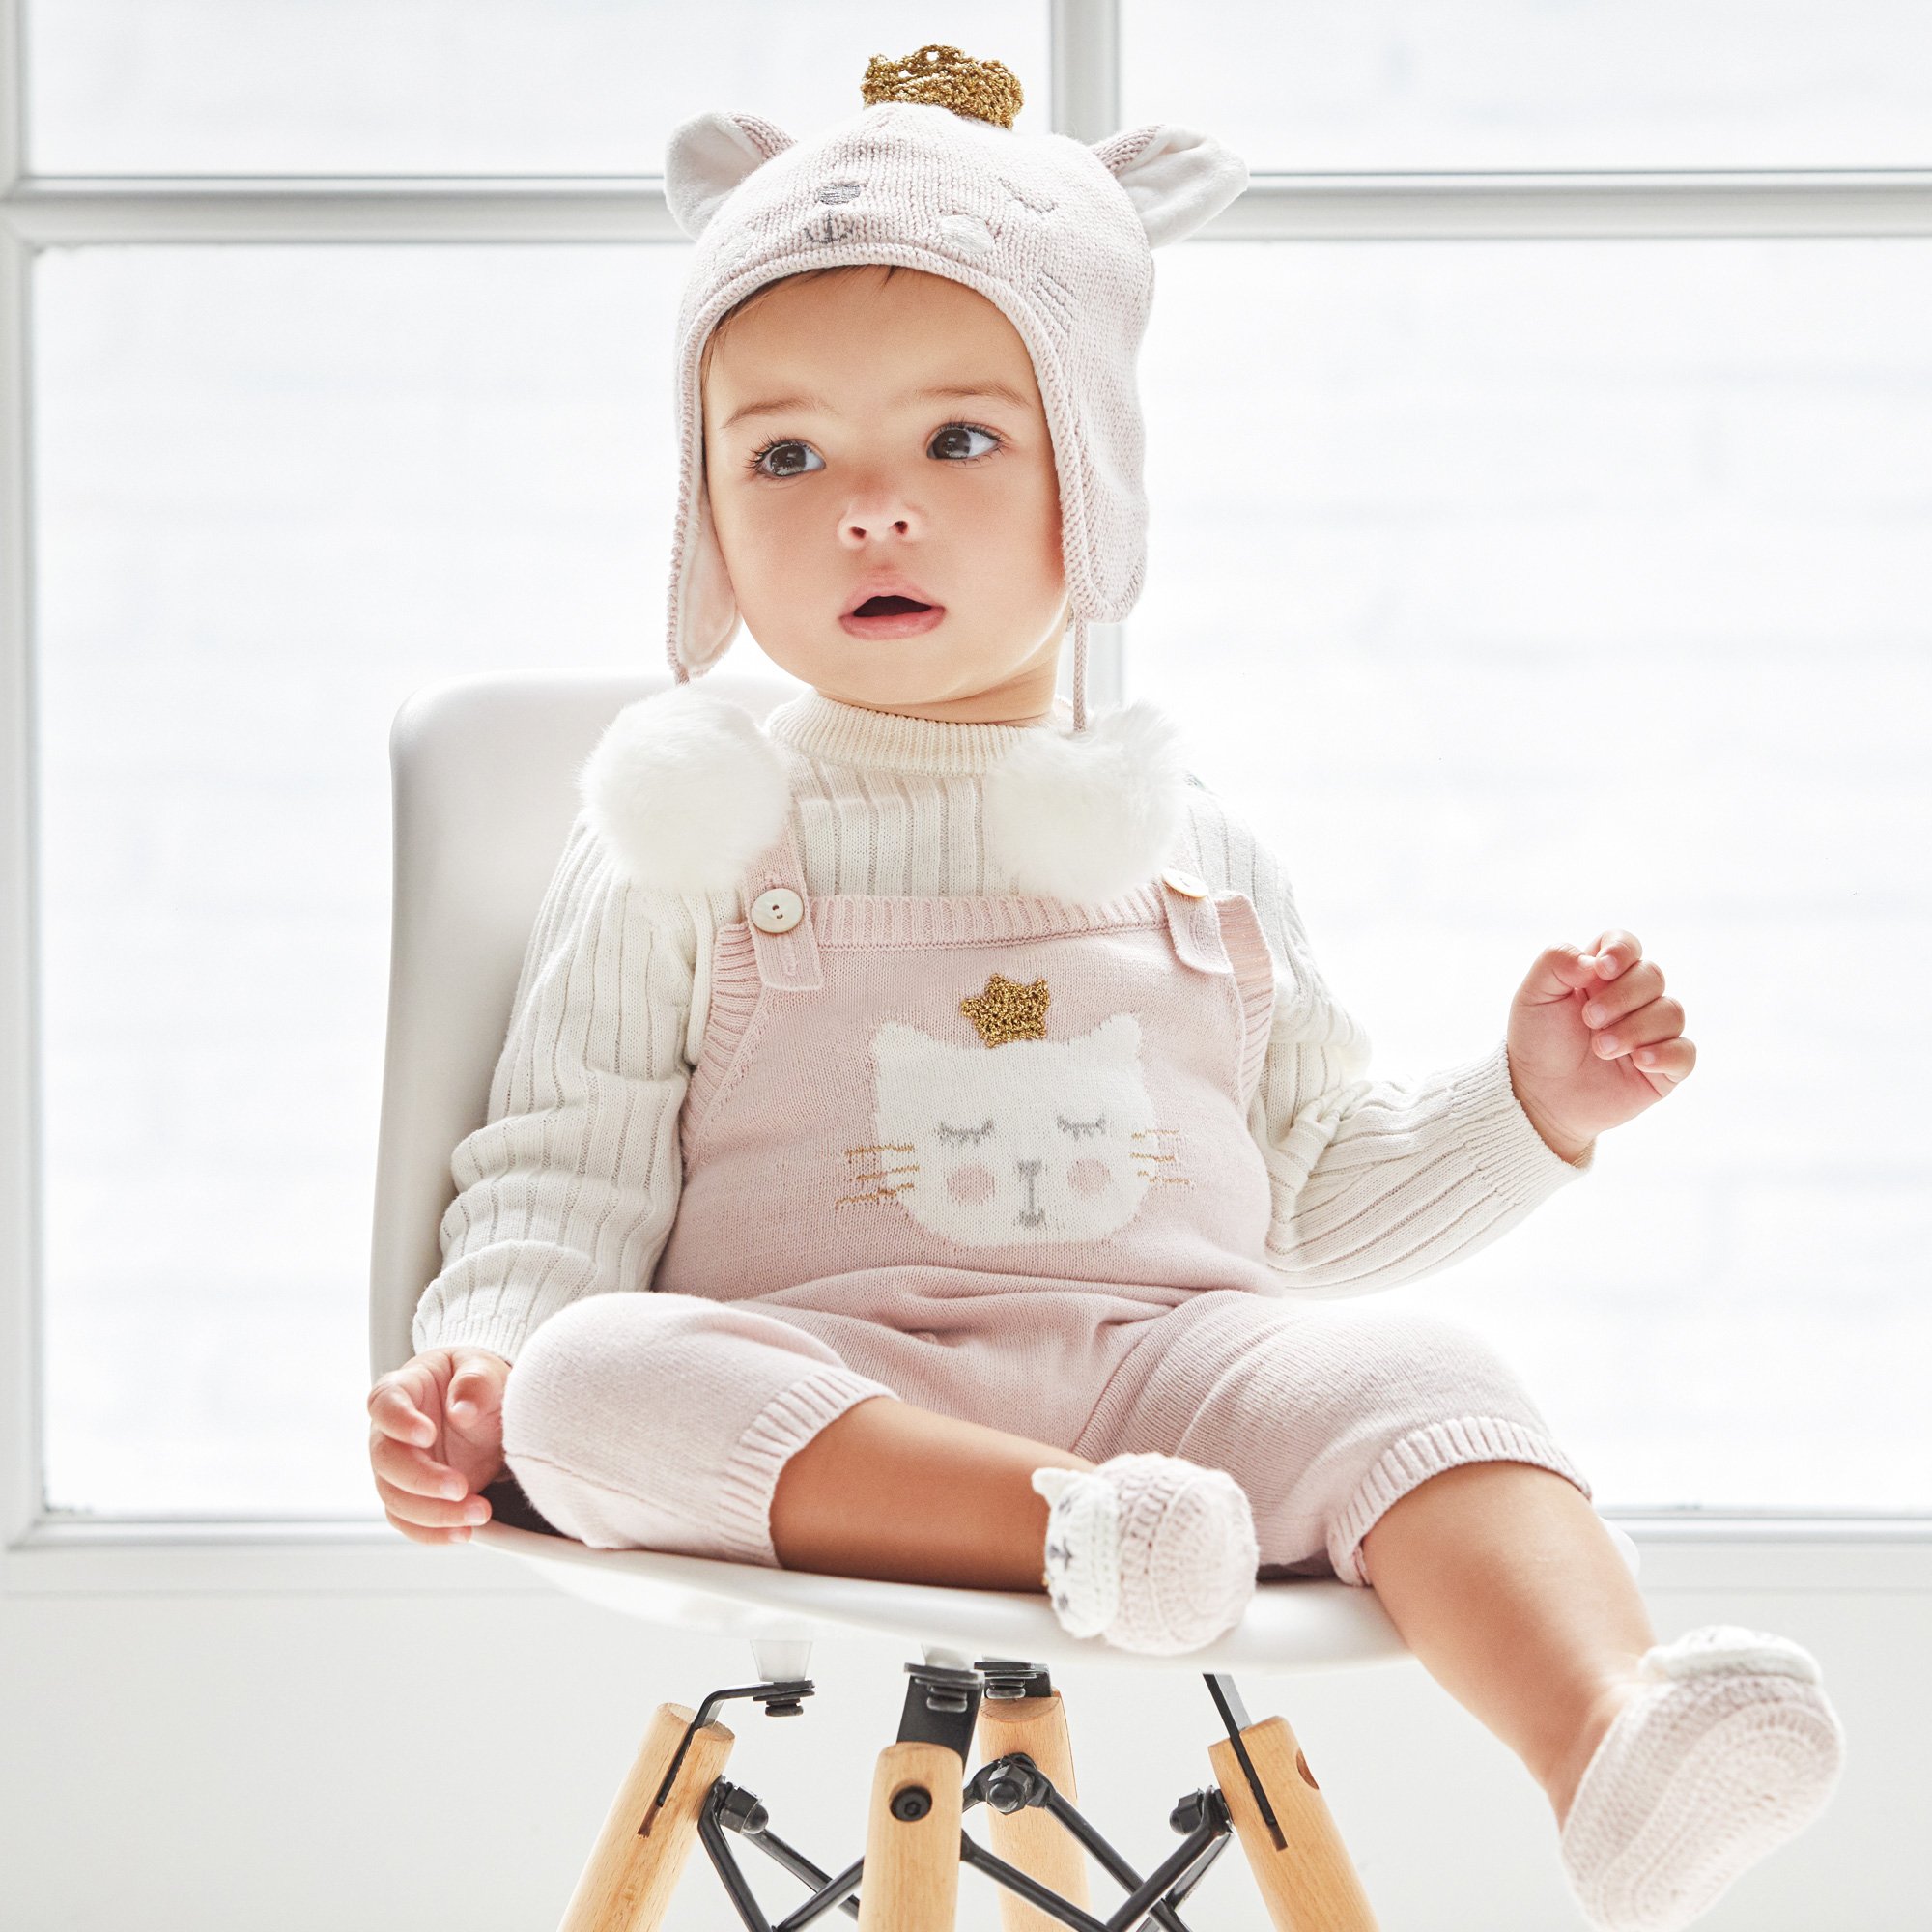 white princess dress for baby girl